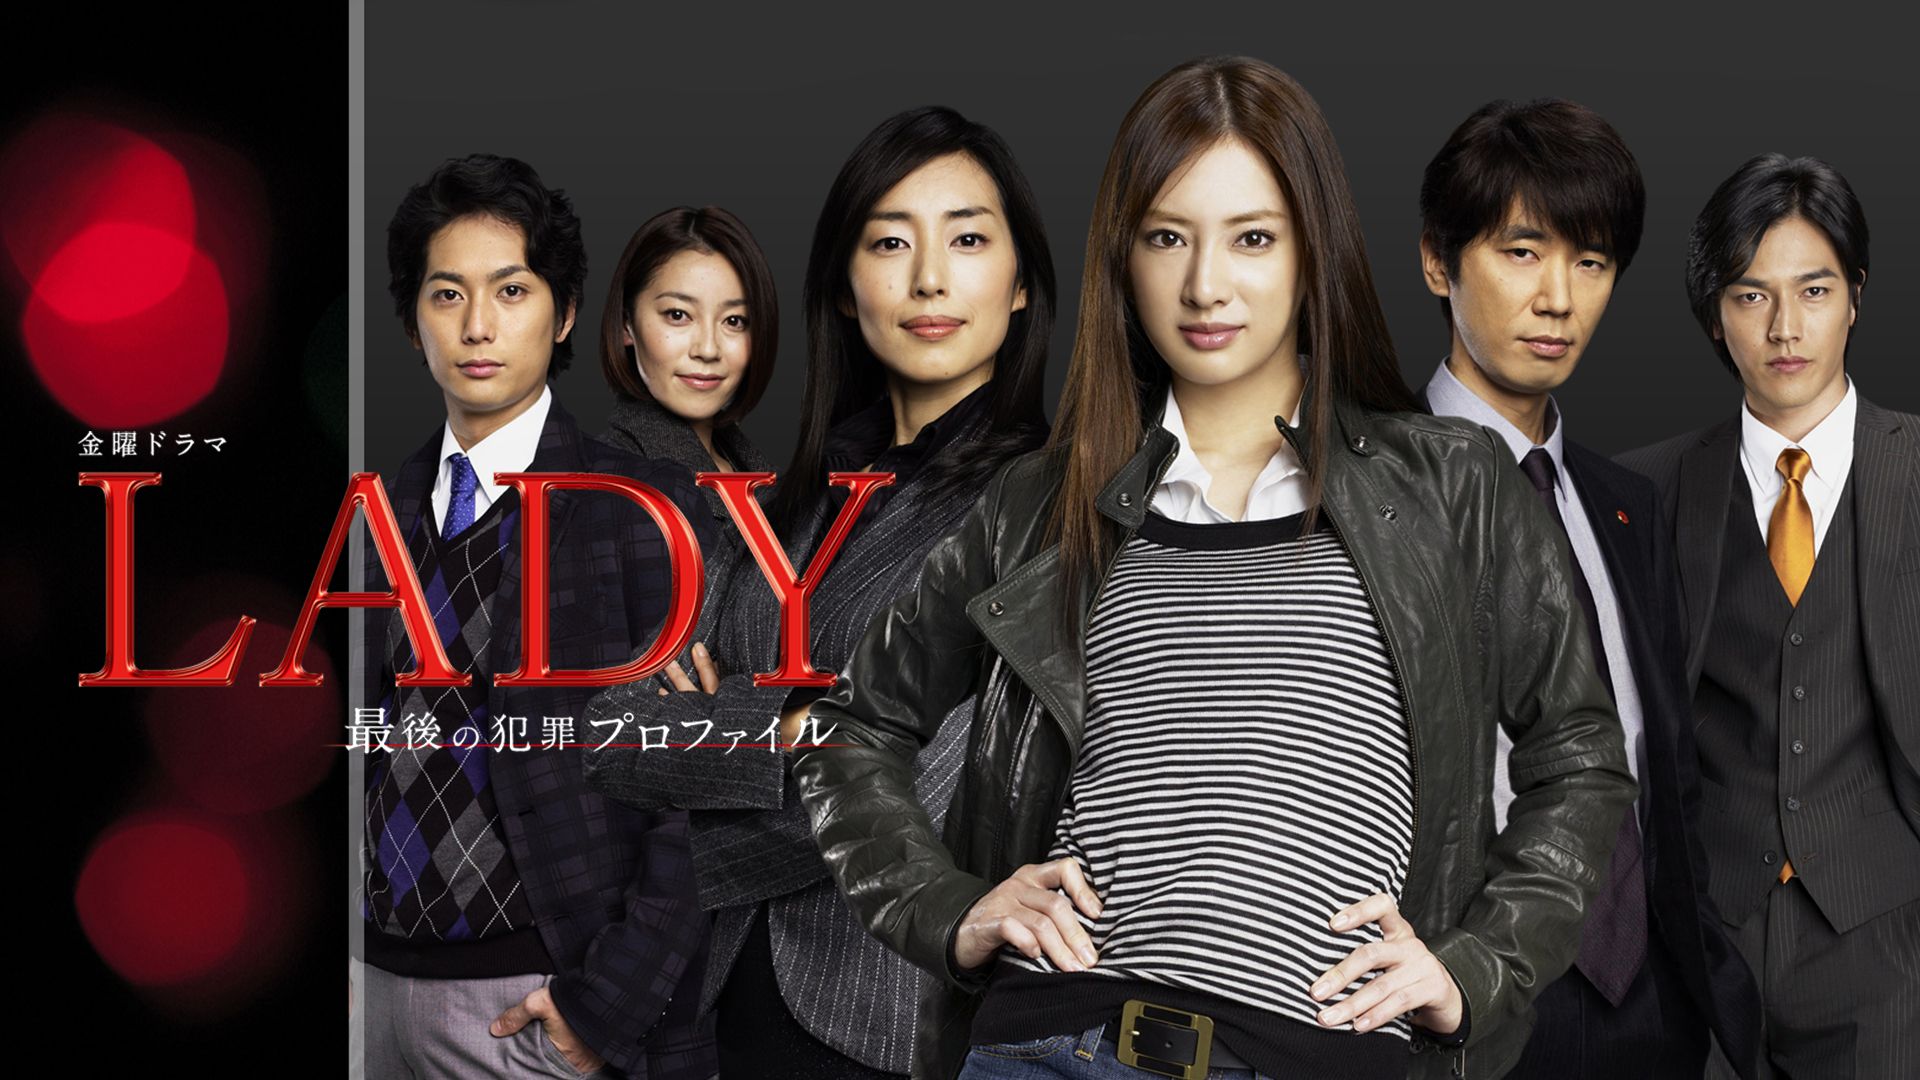 LADY〜最後の犯罪プロファイル〜